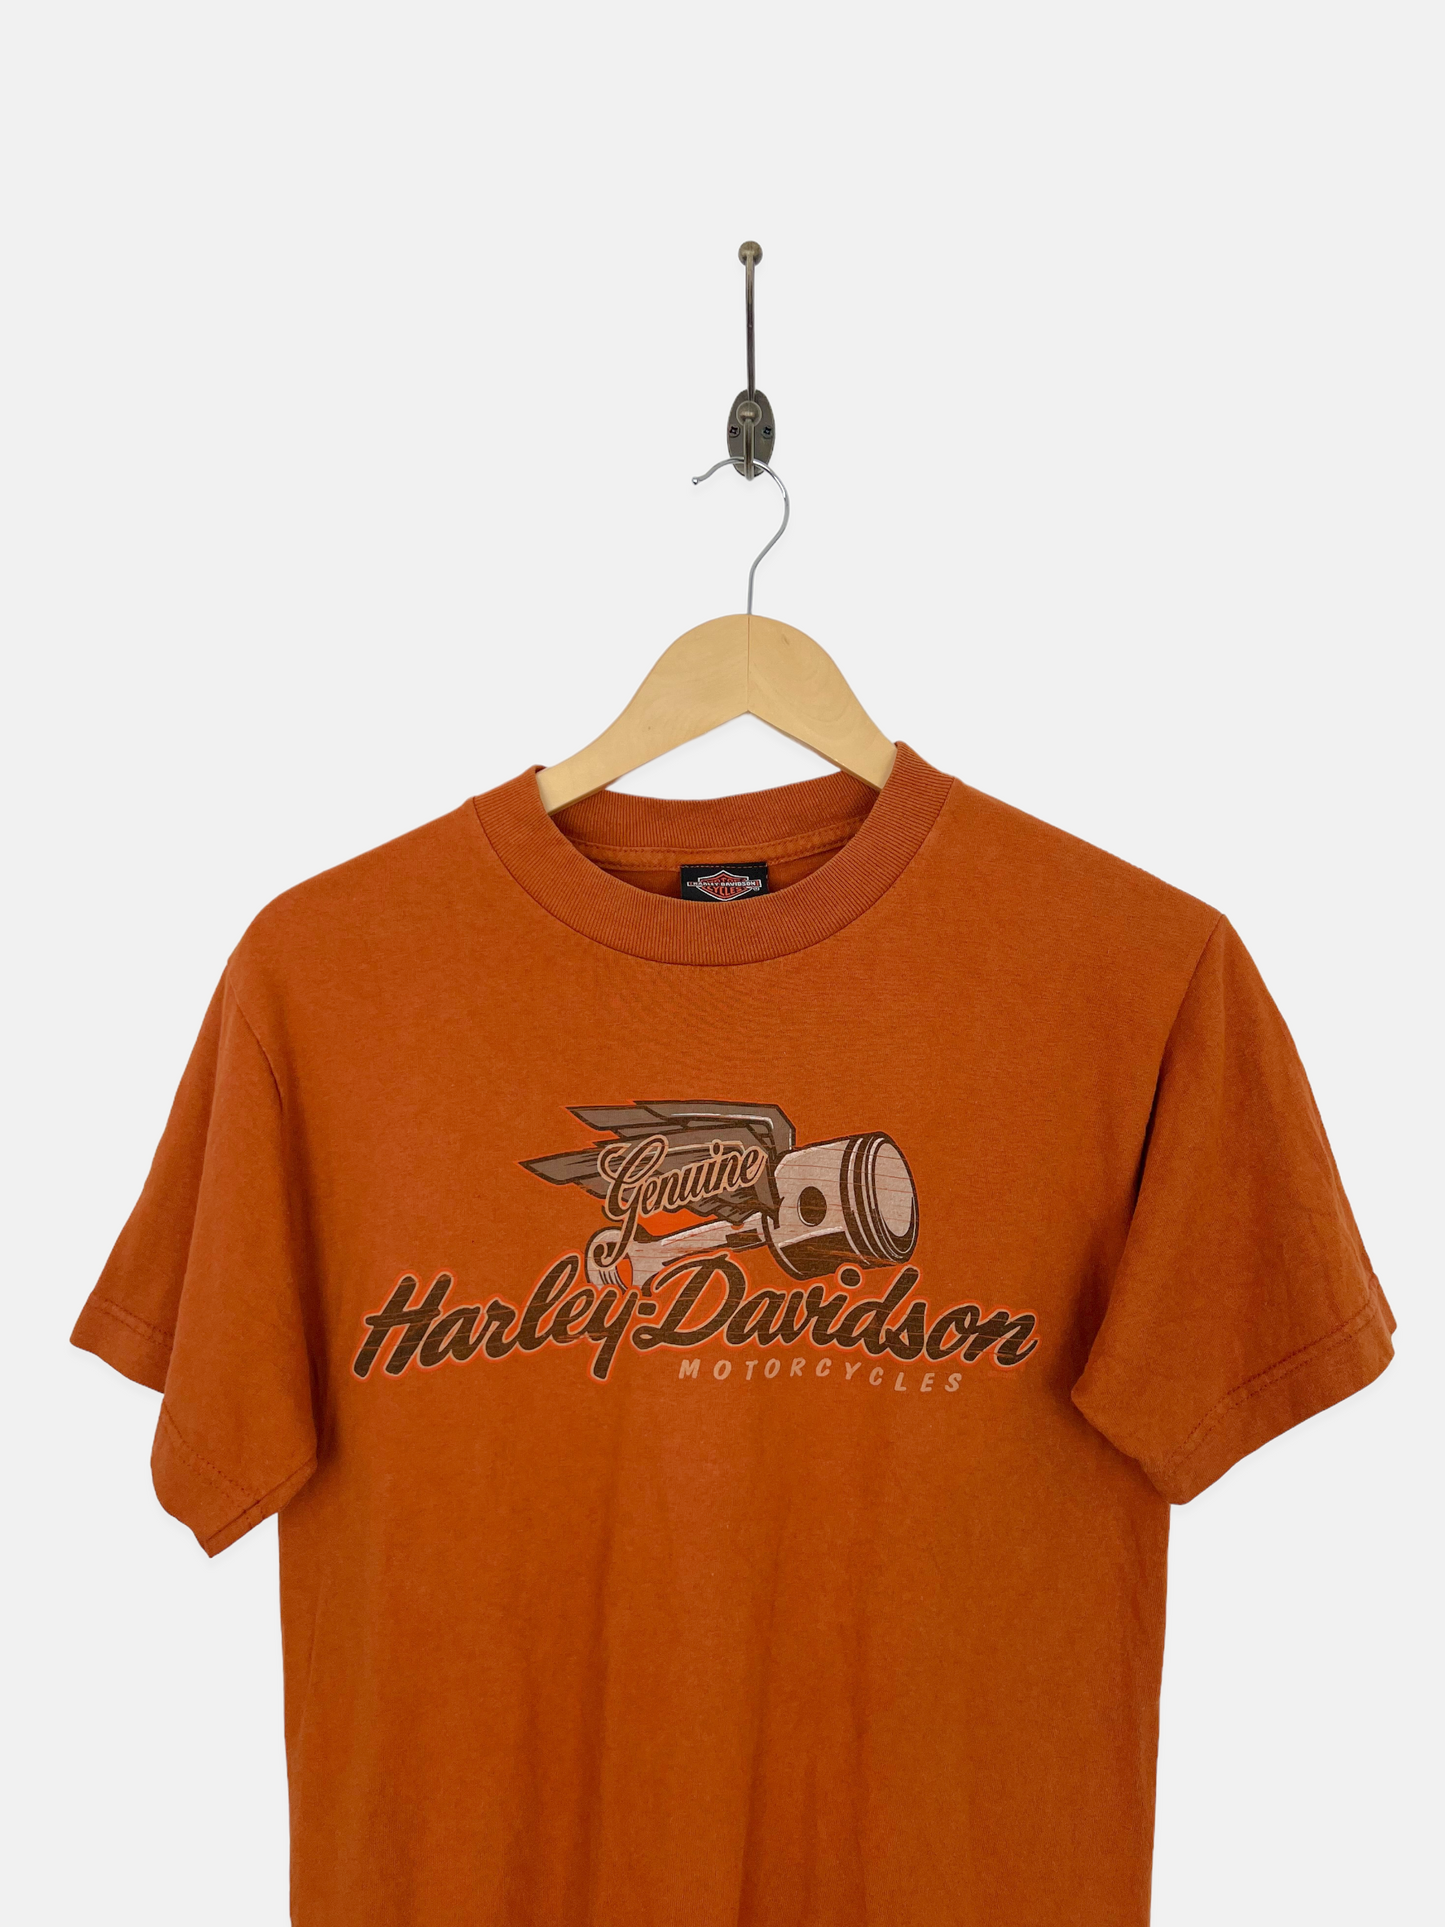 90's Harley Davidson Illinois Vintage T-Shirt Size 6-8